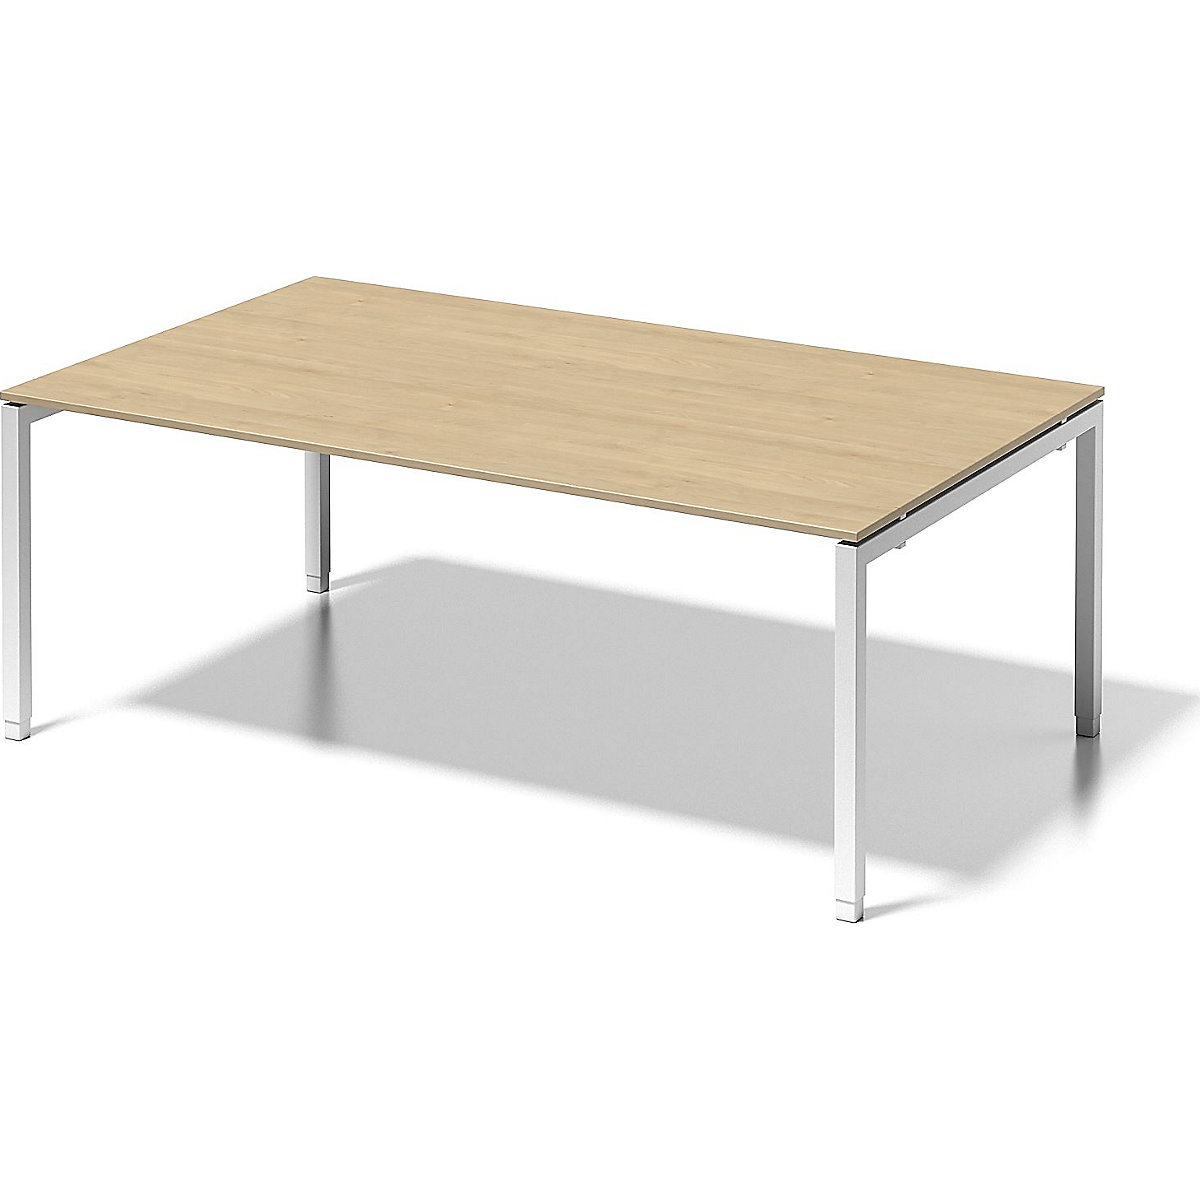 CITO desk, U-frame – BISLEY, HxWxD 650 – 850 x 2000 x 1200 mm, white frame, maple tabletop-6